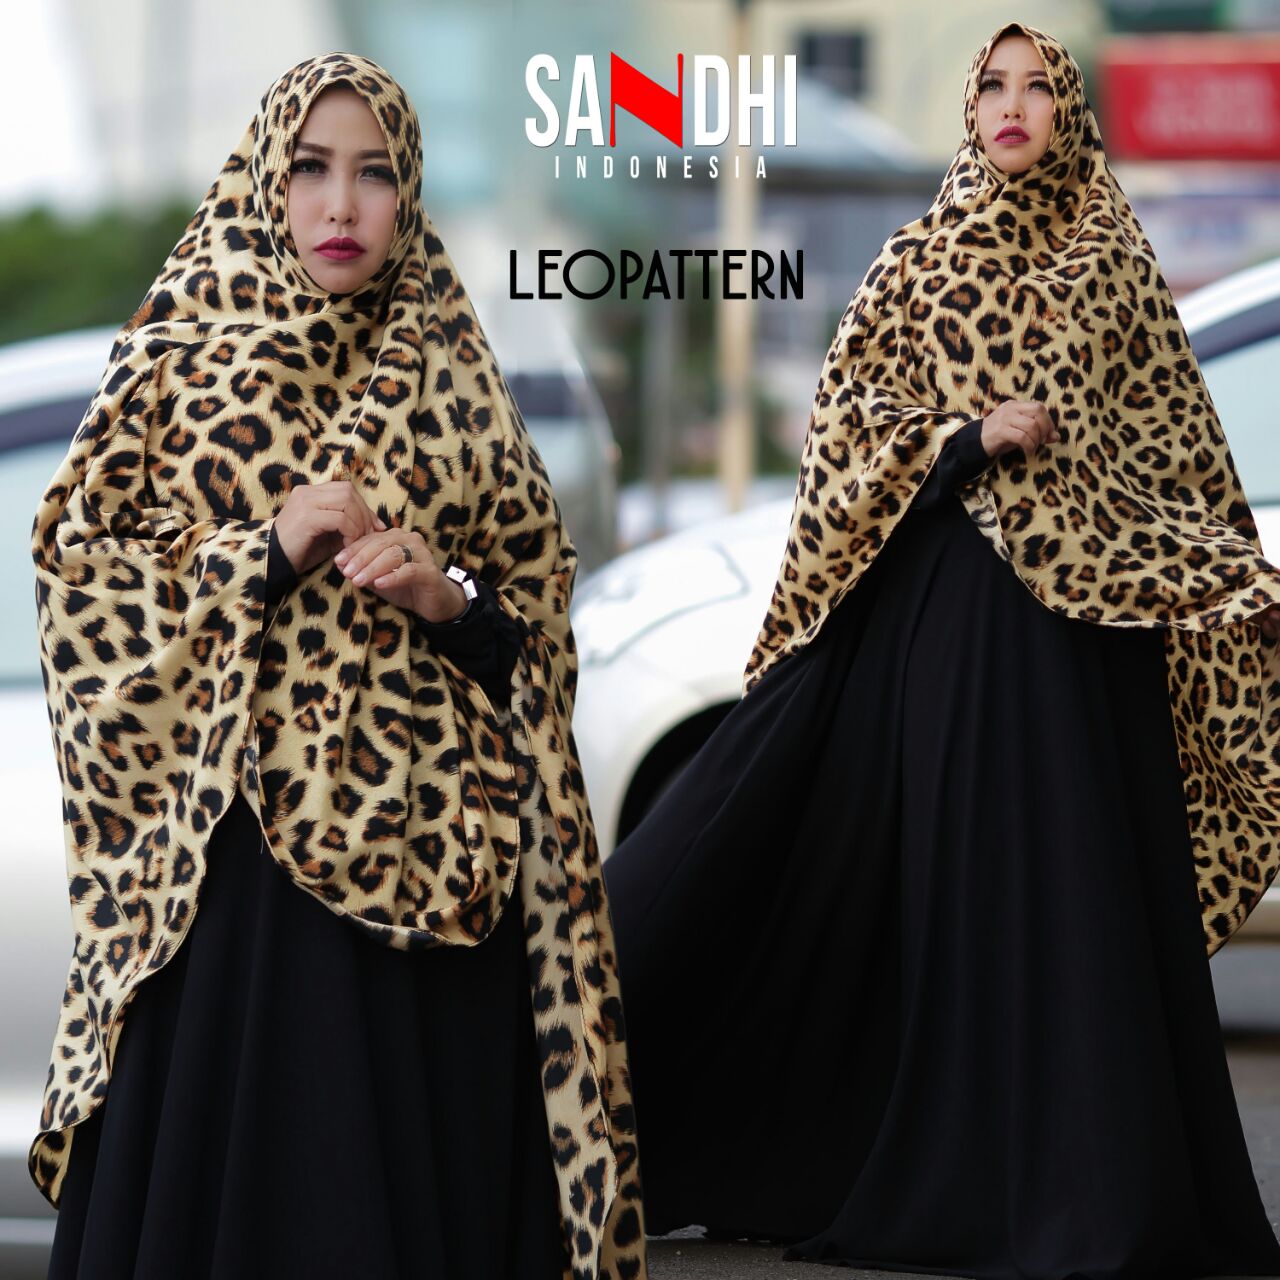  Jual Baju Hijab Artis Leopattern Syar Vol 2 By Sandhi